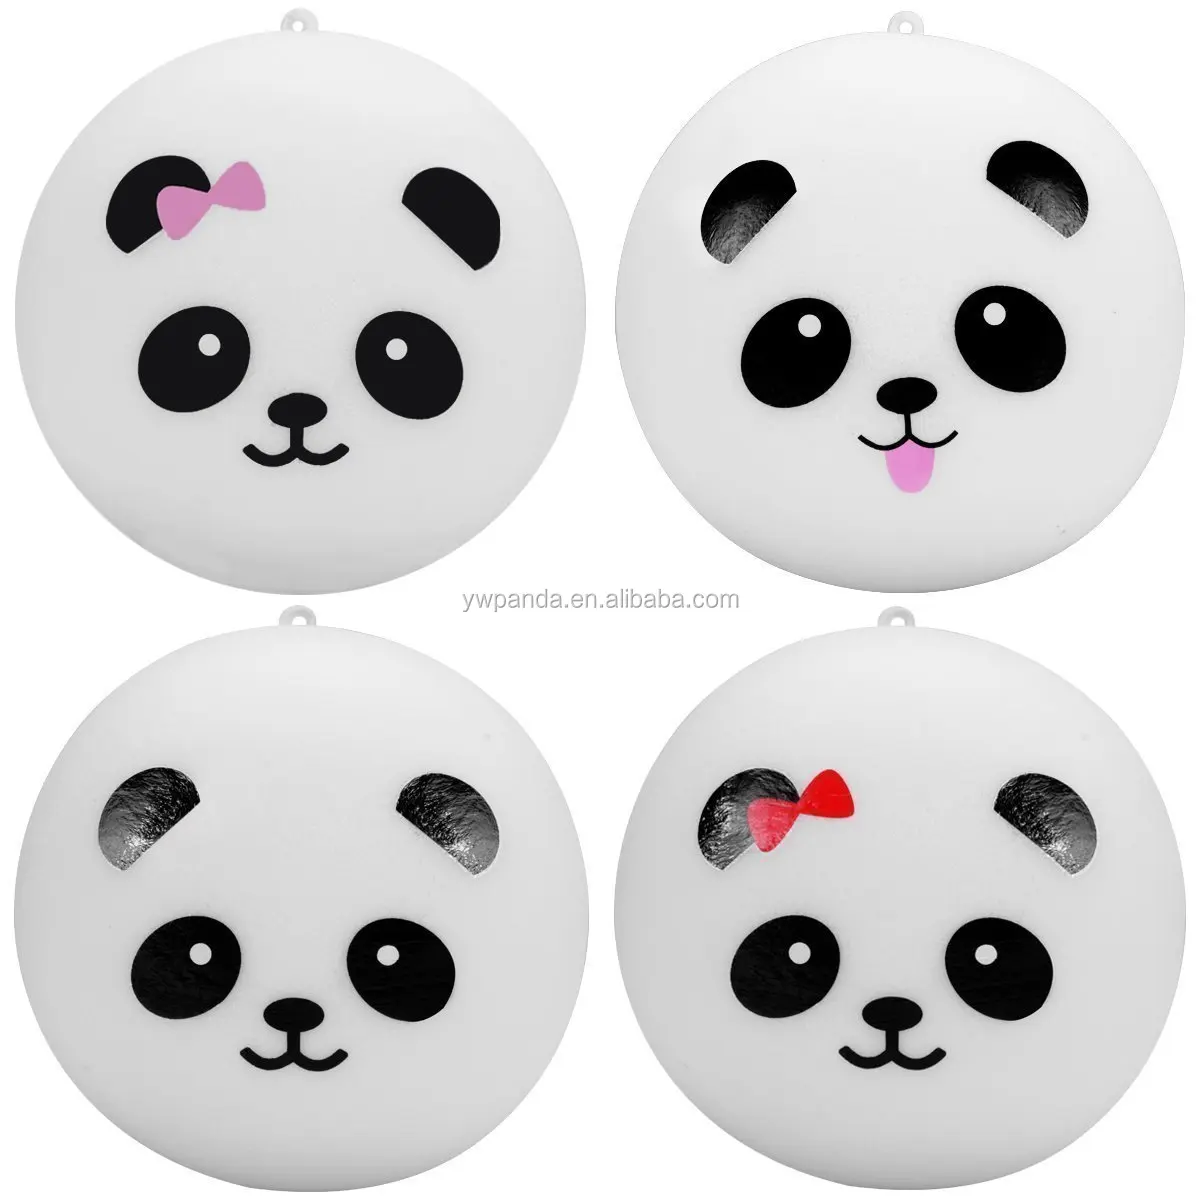 konkurrence Modstander emulering Wholesale Panda Bun Squishies From m.alibaba.com